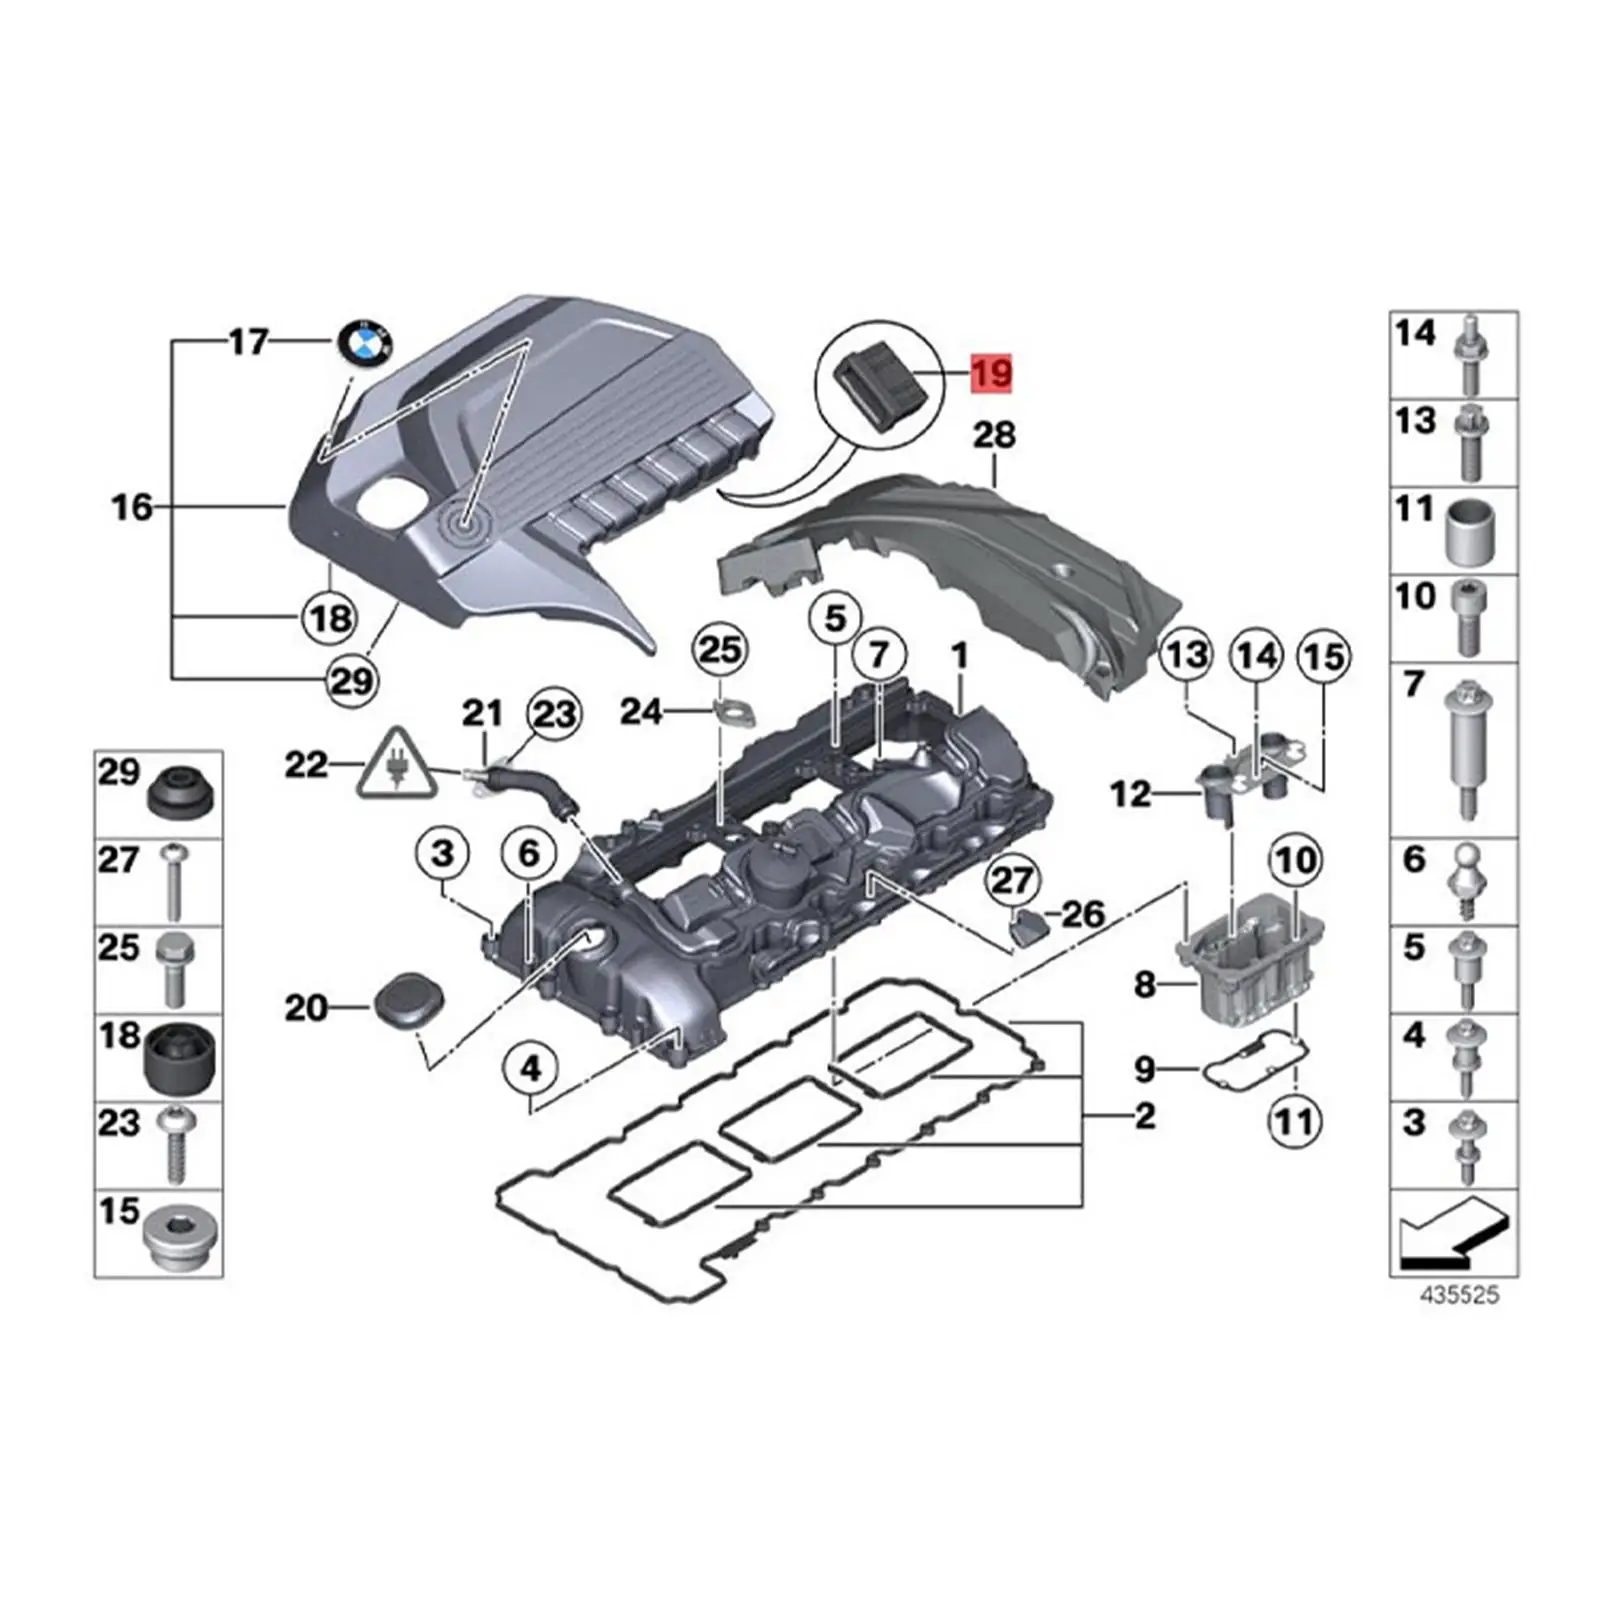 Upper Radiator Mount Parts 17111712911 Repair Parts for BMW E32 735i E38 740i E34 530i E32 740i E38 750il